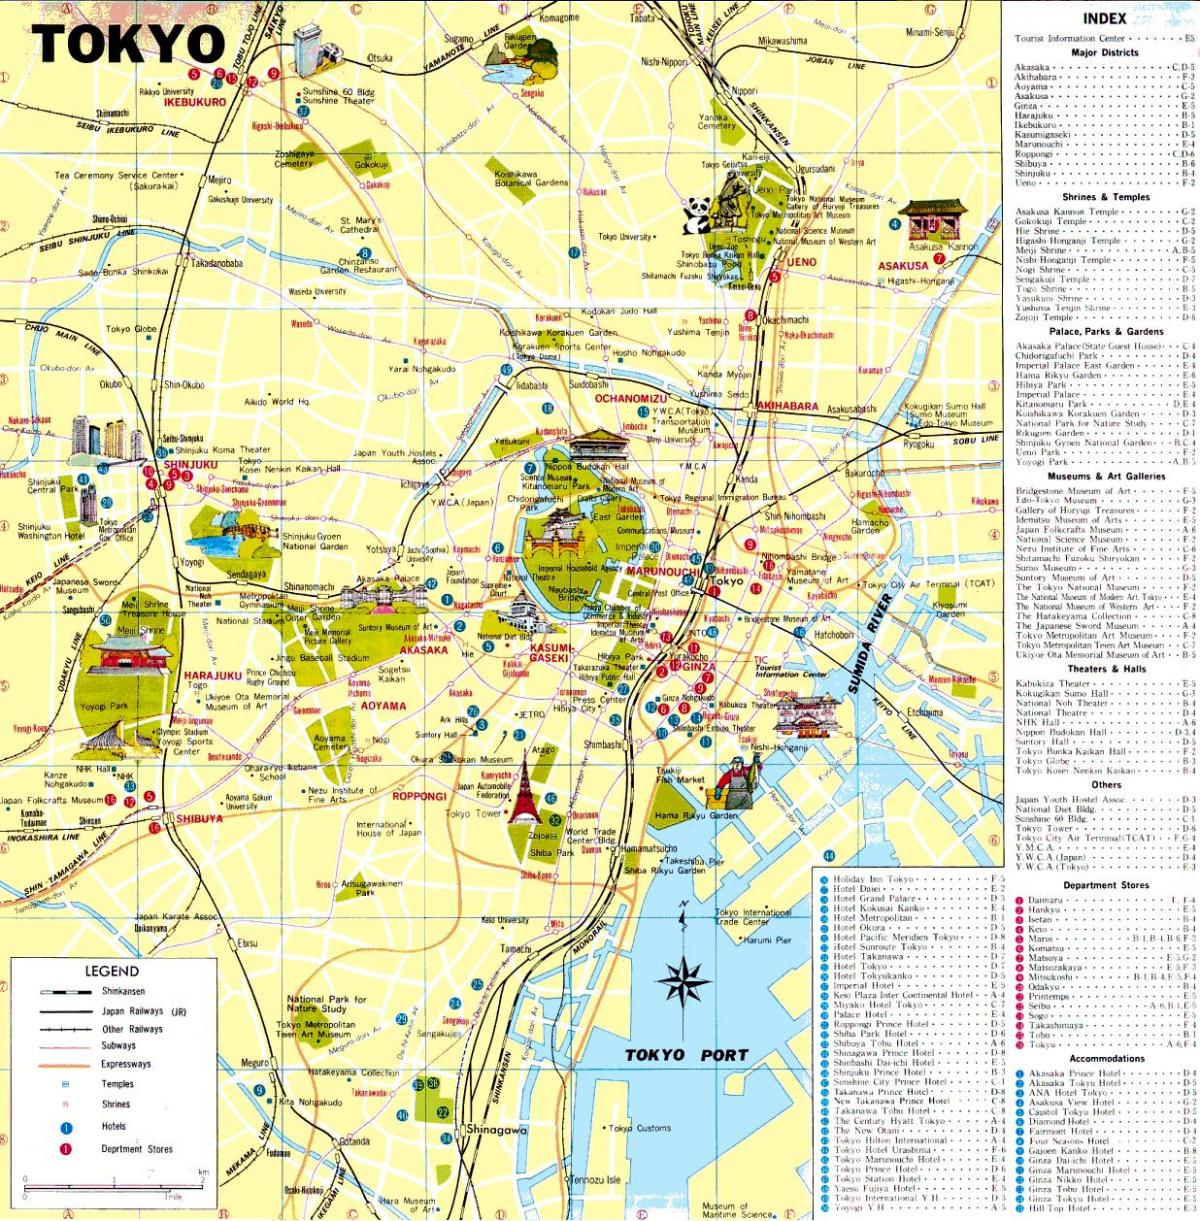 Tokyo mapa pro turisty